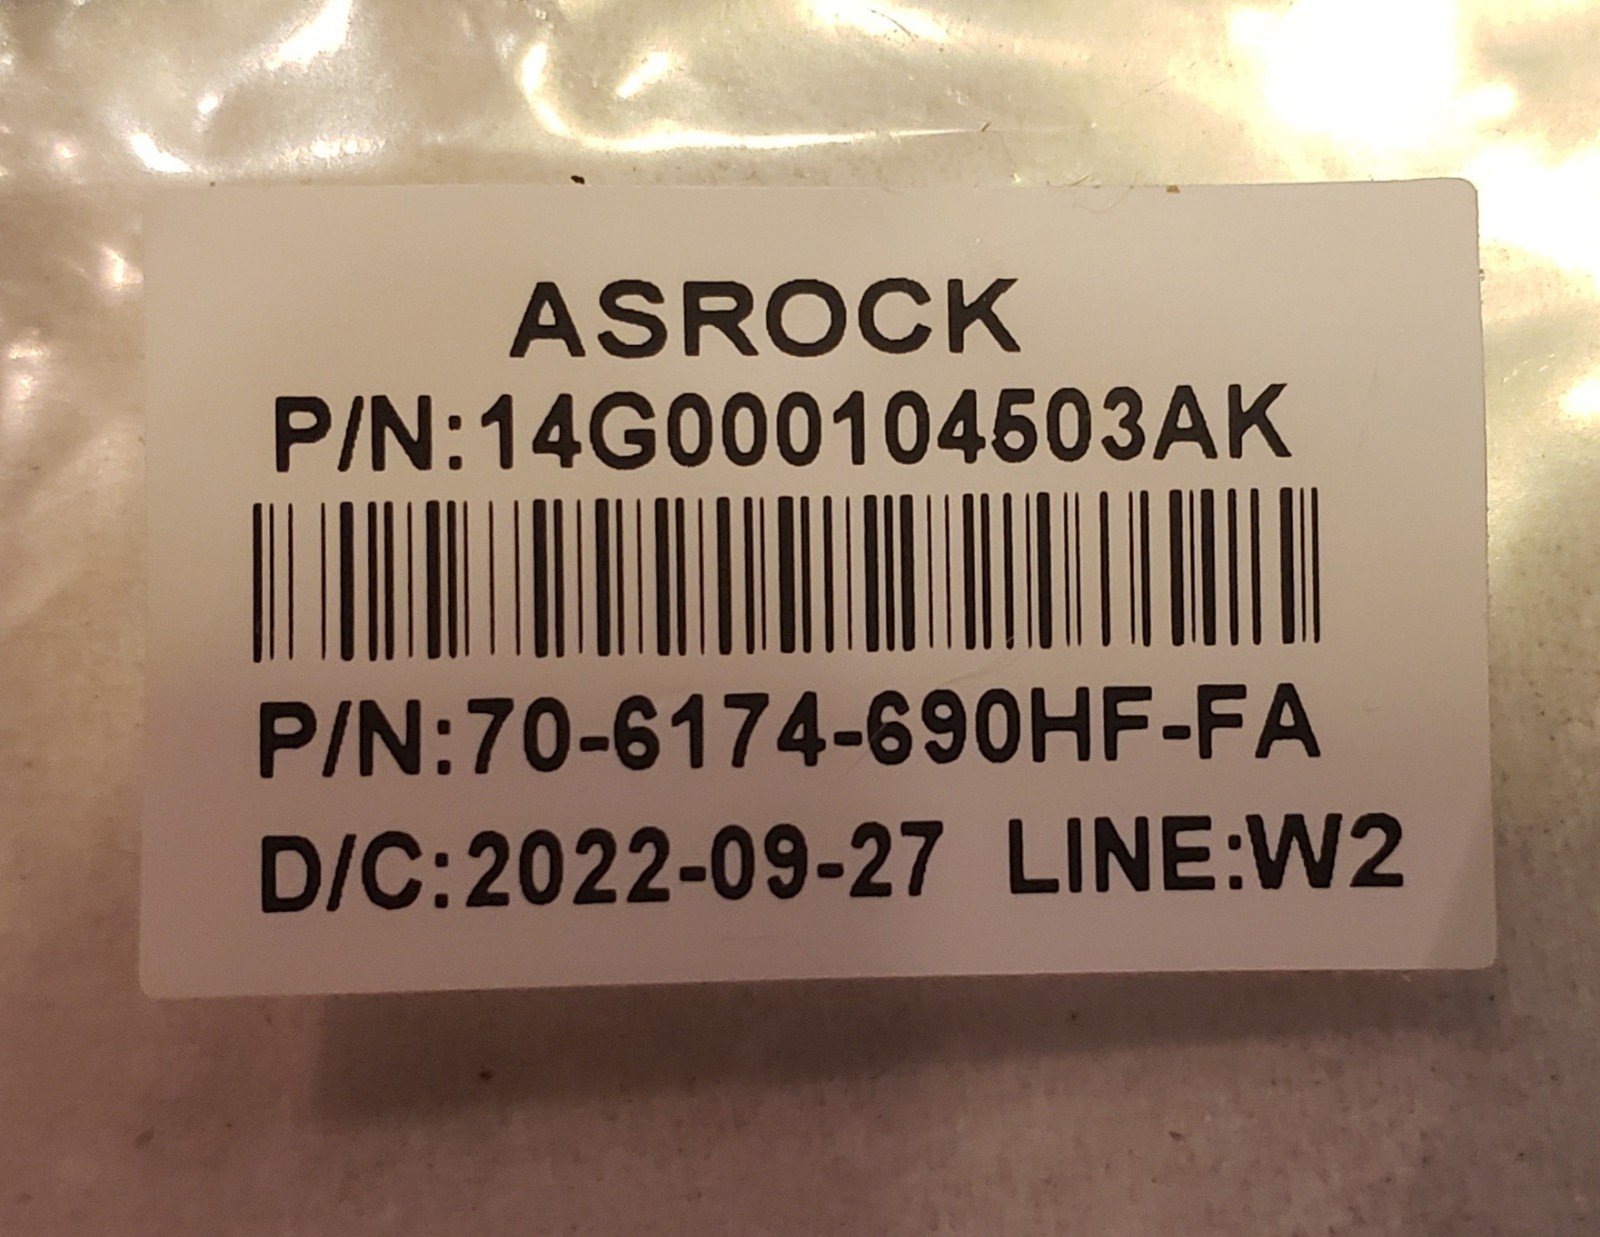 ASRock SATA HDD Cable. ASRock Part #14G000104503AK. Ck441gEyD